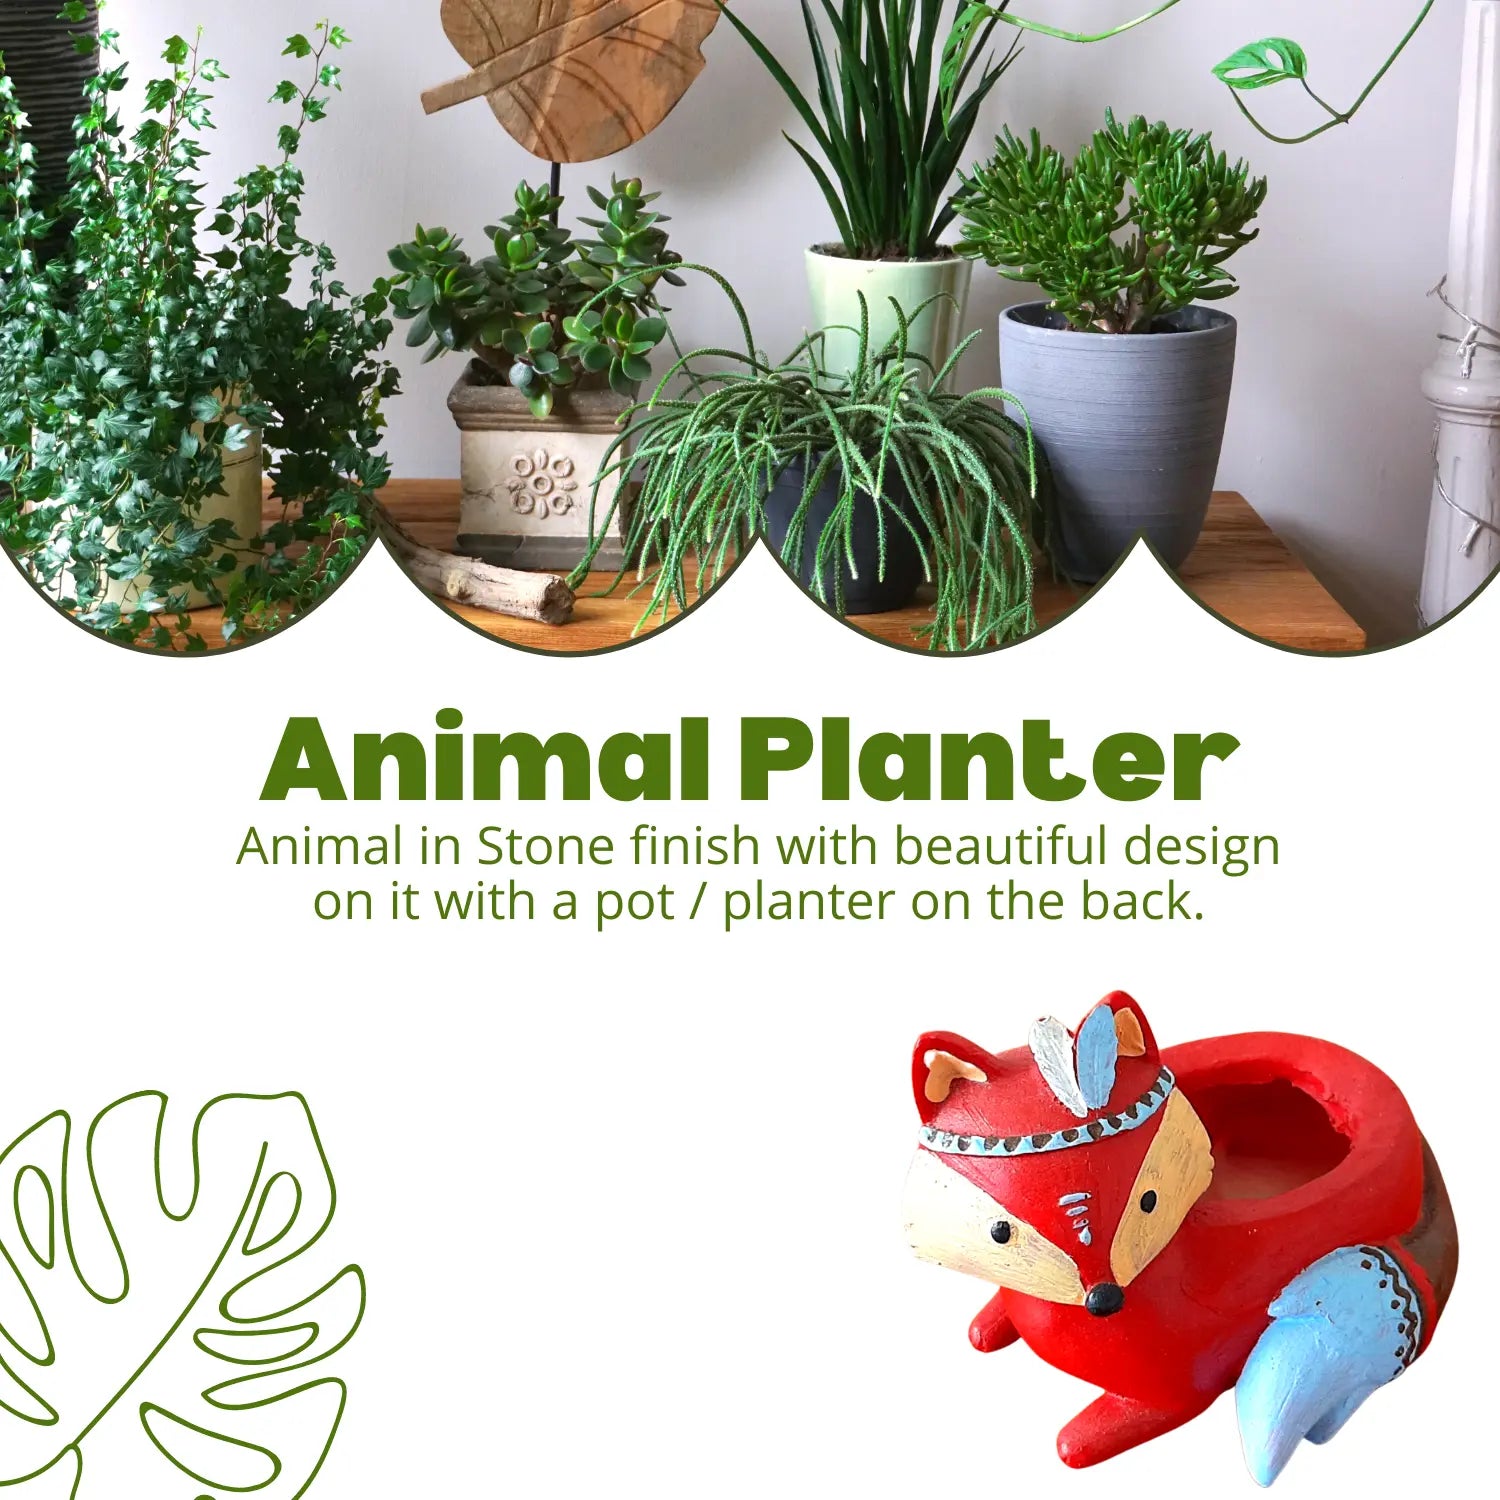 Animal planter